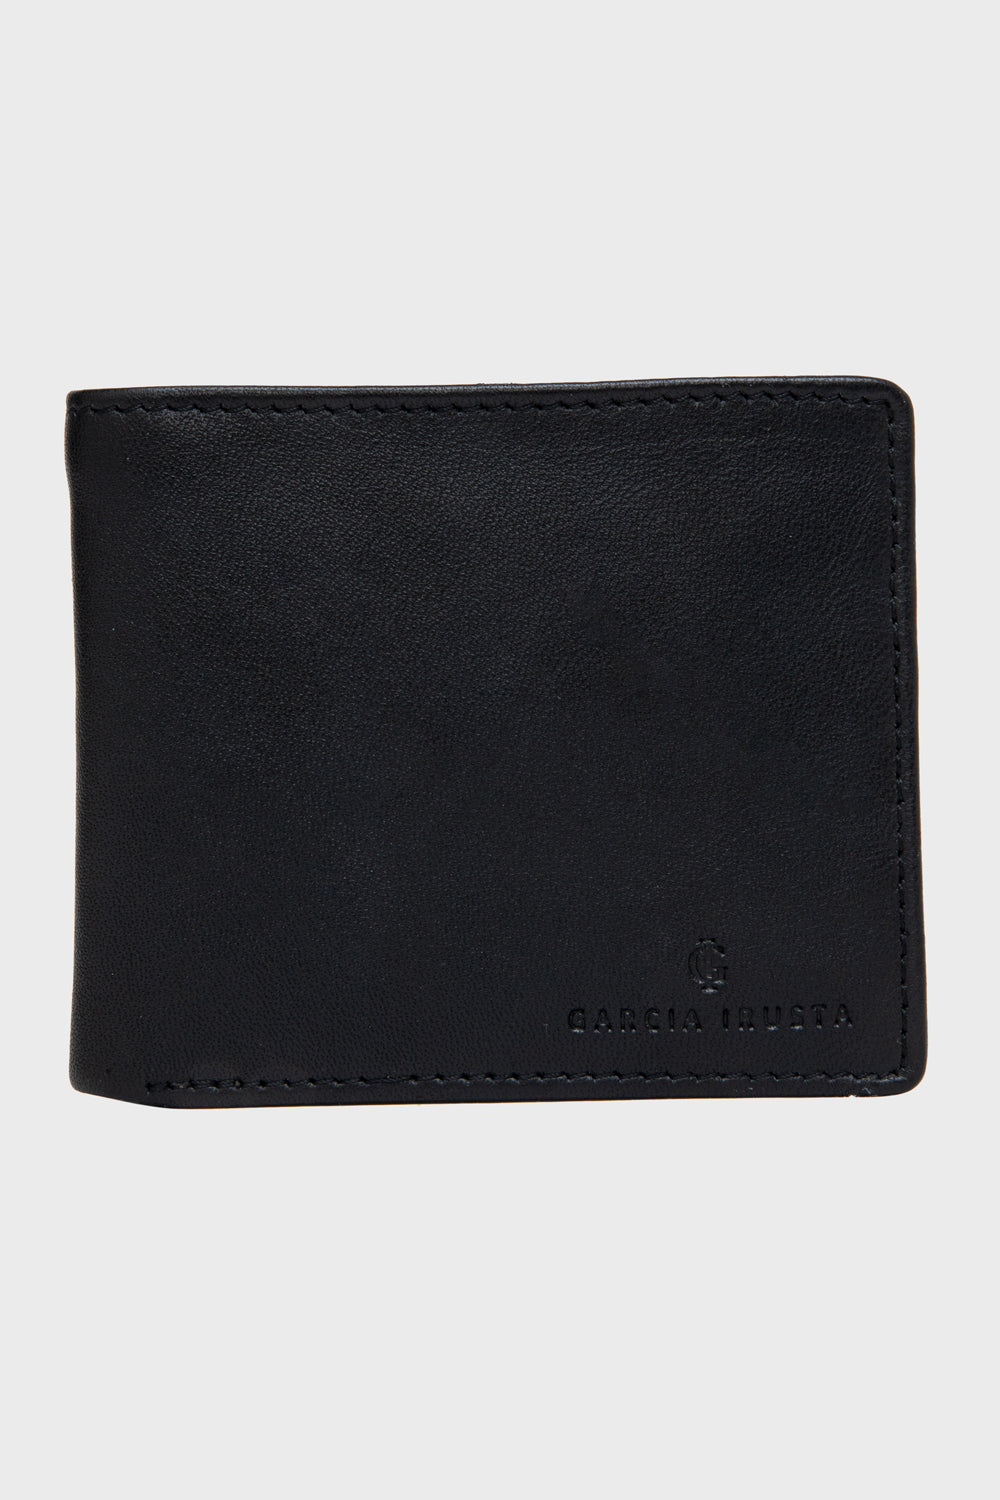 Justanned Black Genuine Leather Wallet